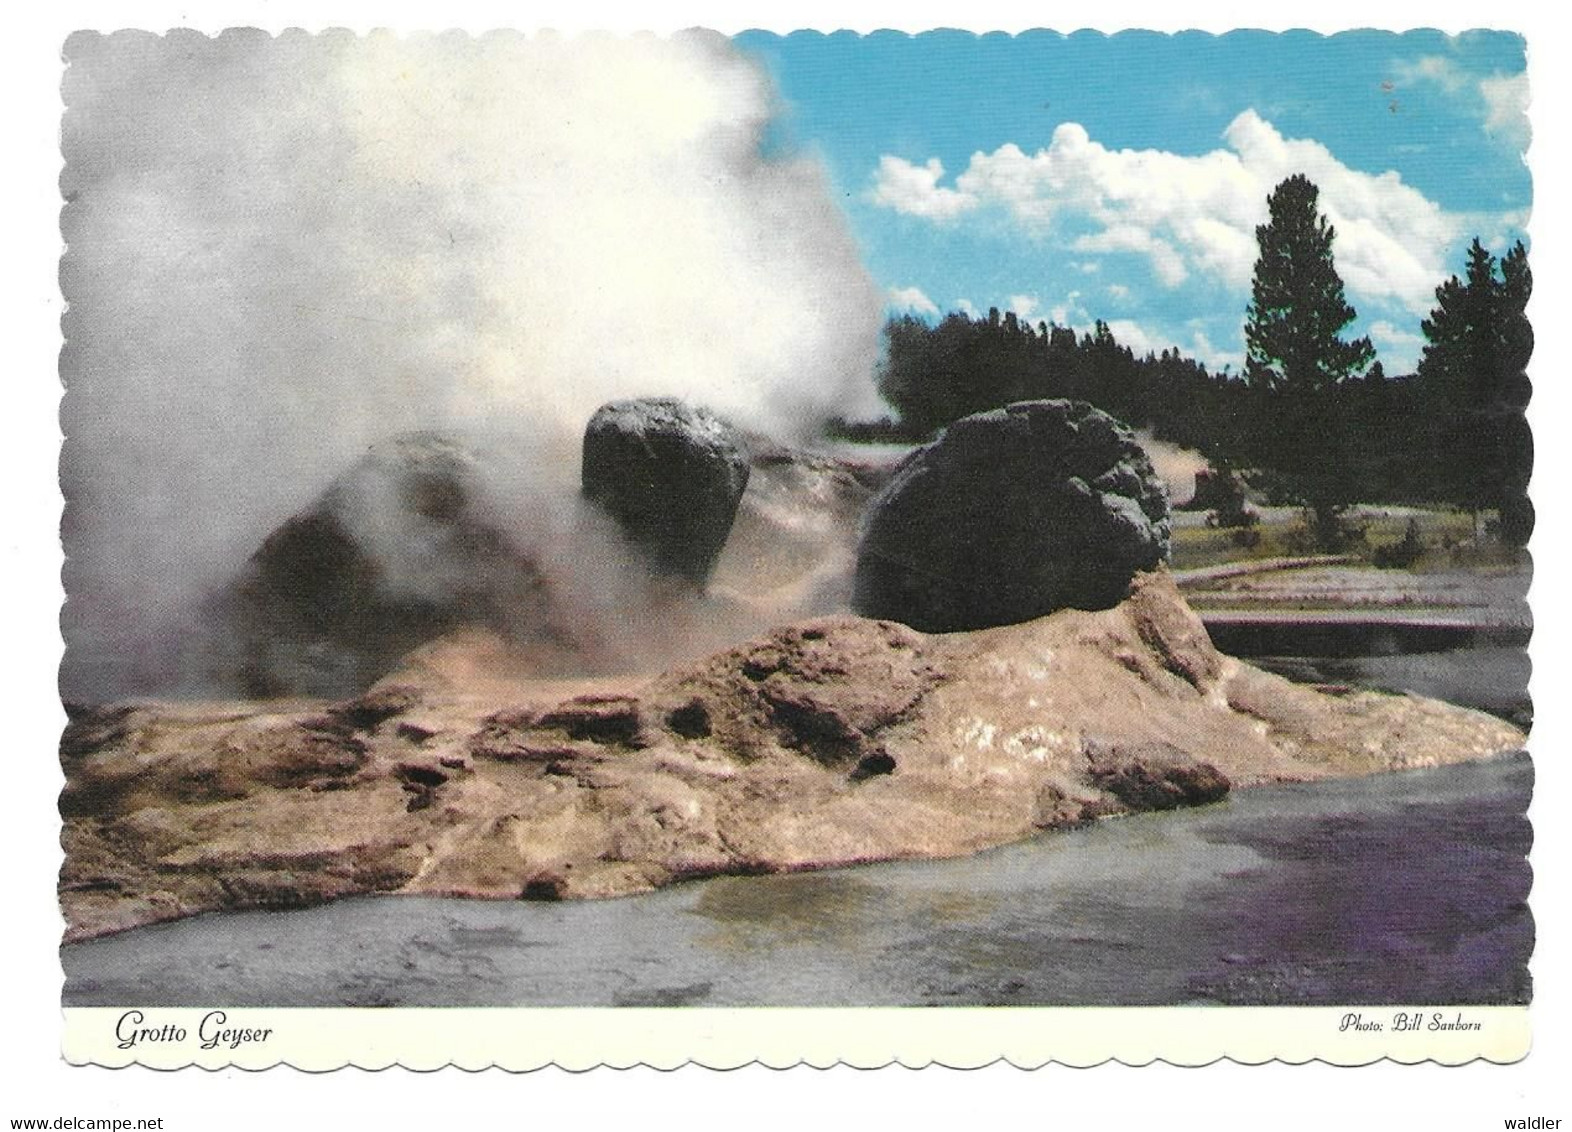 WY - WYOMING  --  YELLOWSTONE - GROTTO GEYSER - Yellowstone